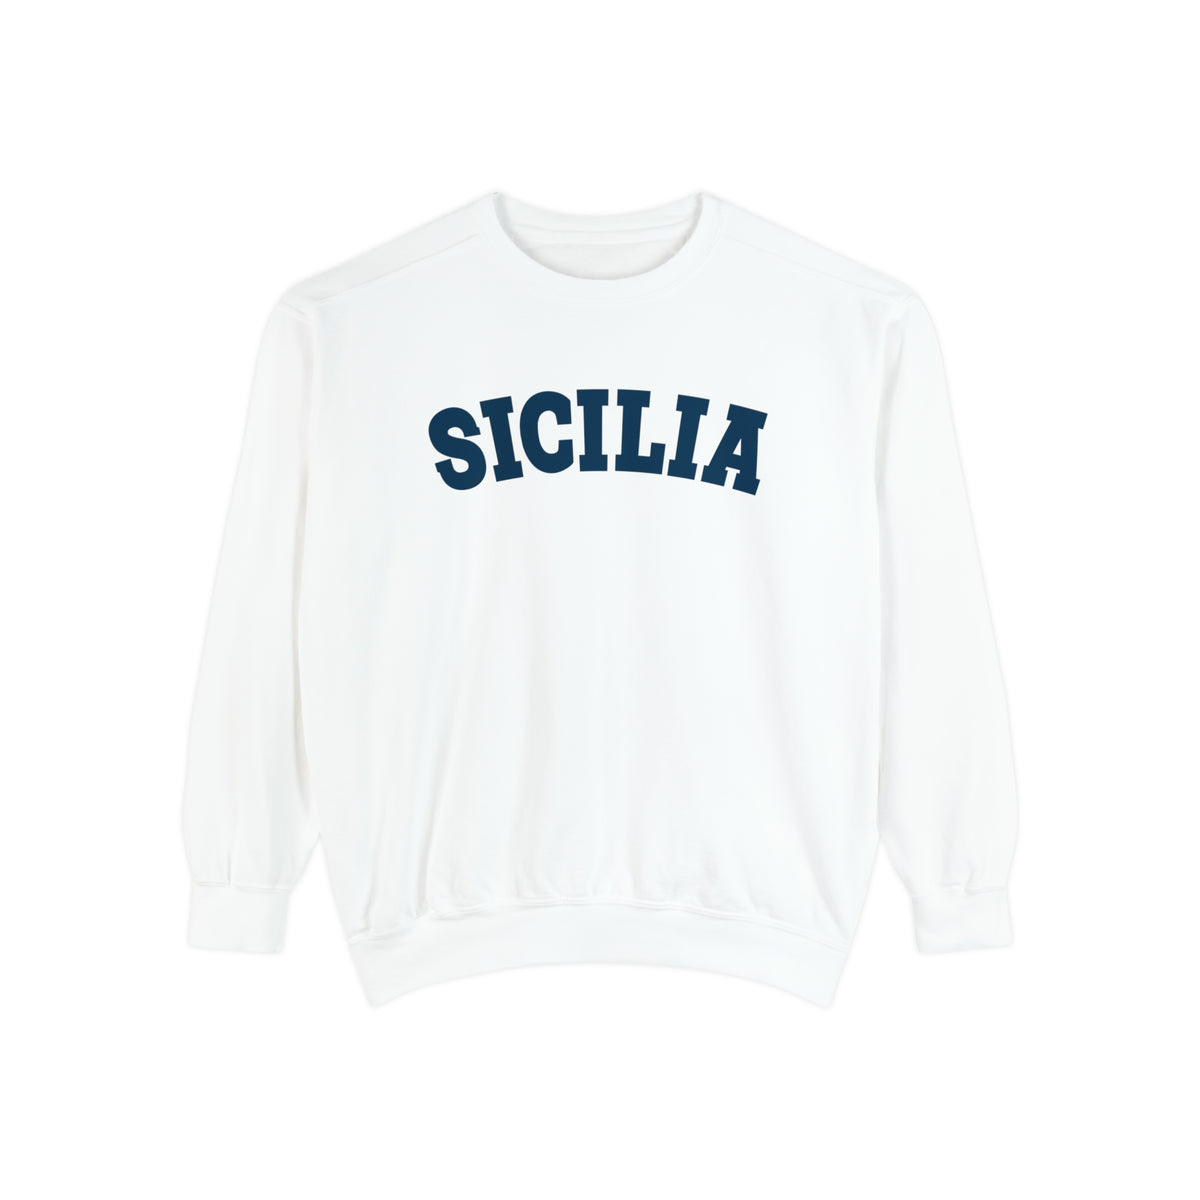 Sicilia College Style Italian Shirt | Sicily Italy Italian Gift | Unisex Garment-Dyed Sweatshirt